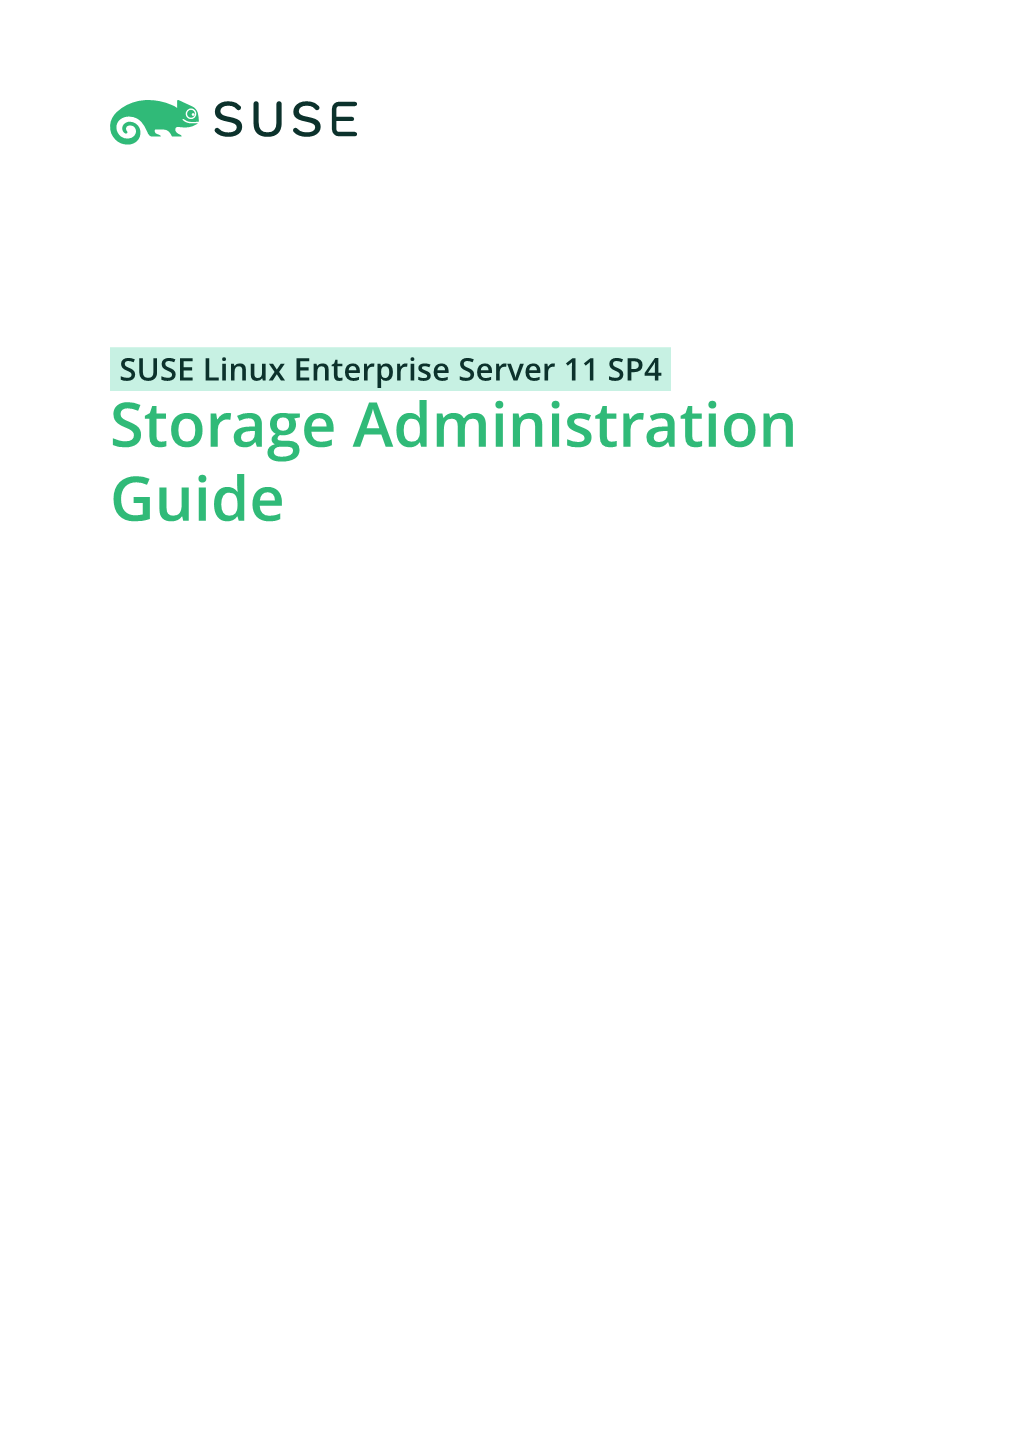 SUSE Linux Enterprise Server 11 SP4 Storage Administration Guide Storage Administration Guide SUSE Linux Enterprise Server 11 SP4